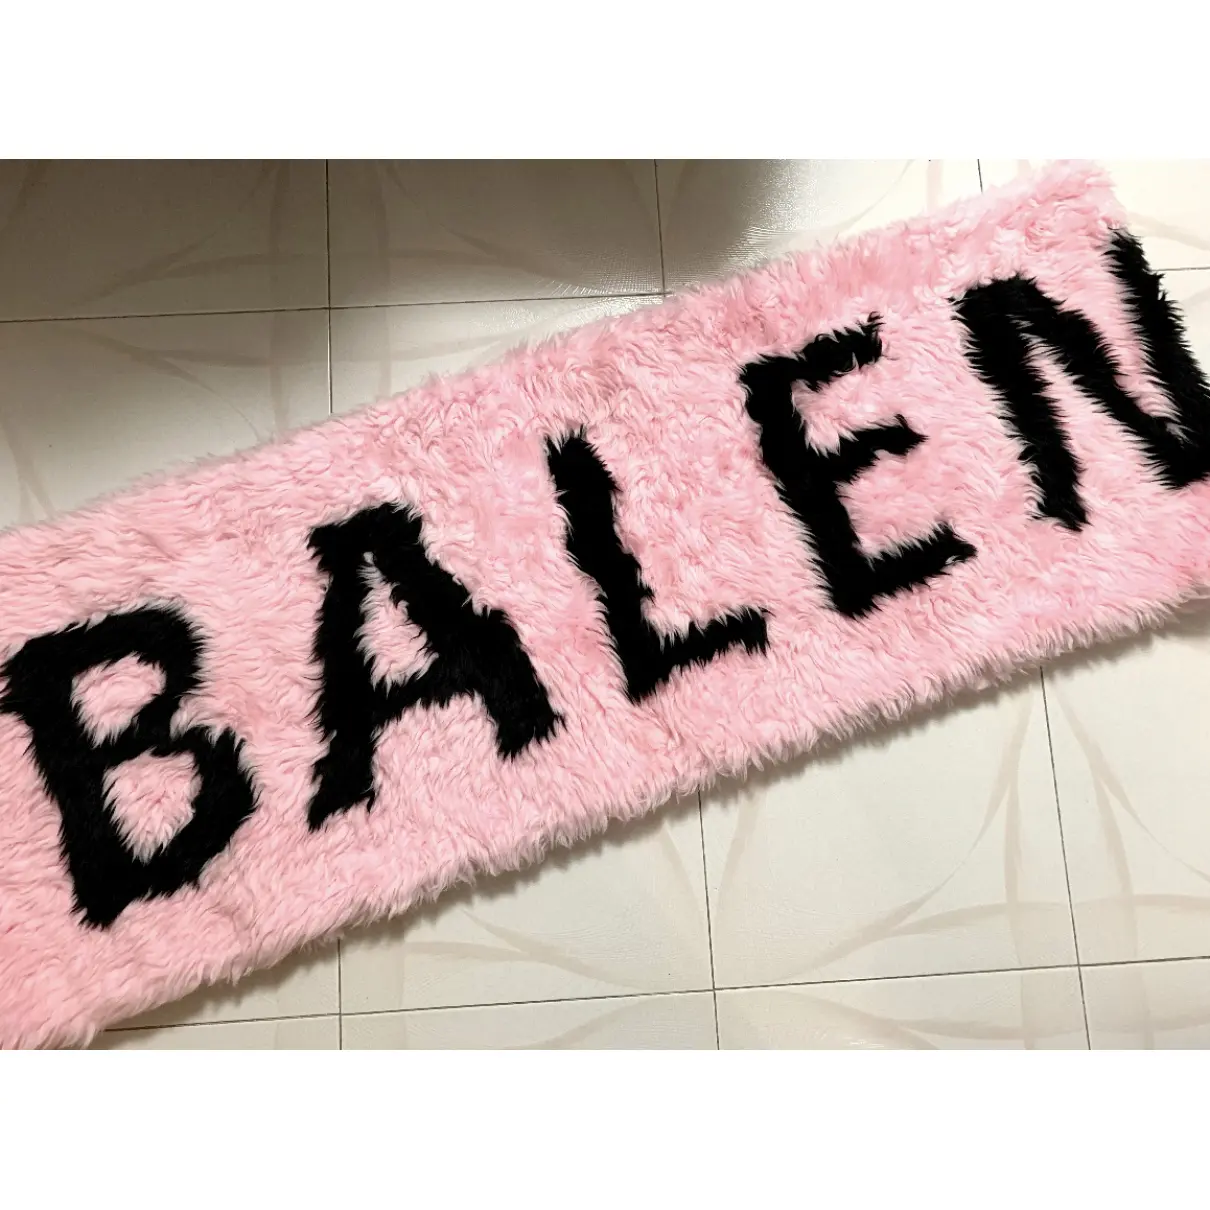 Buy Balenciaga Scarf online